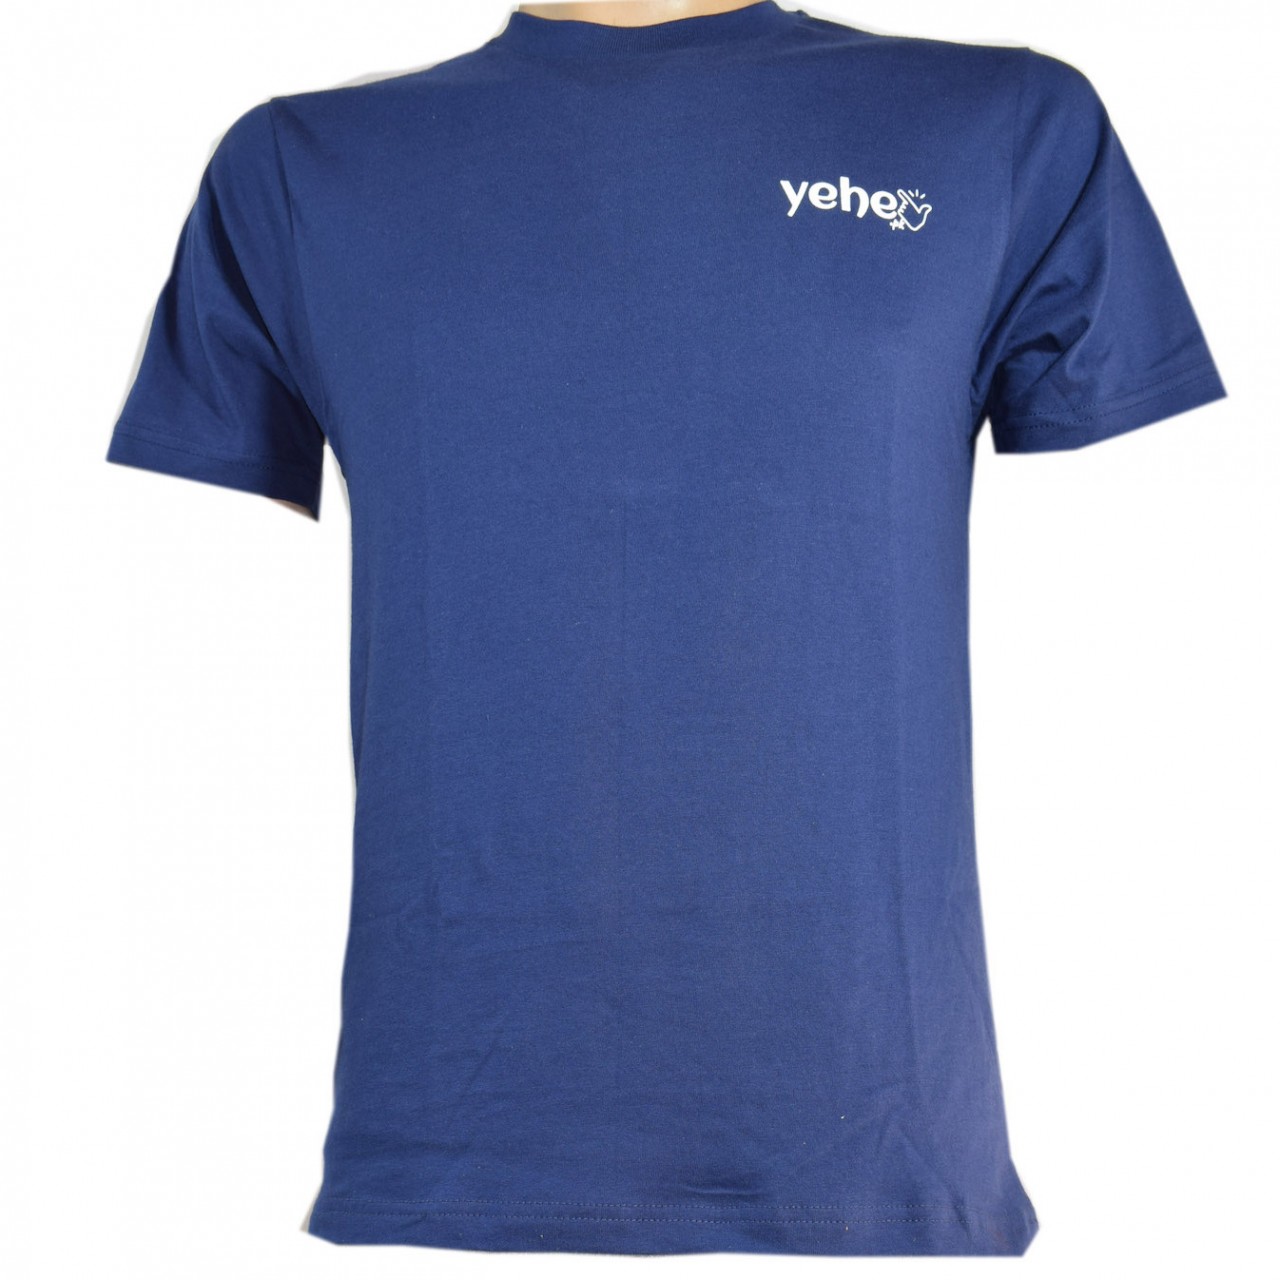 T-Shirt Navy Blue Summer Plain 100% Cotton for Men - Sale price - Buy ...